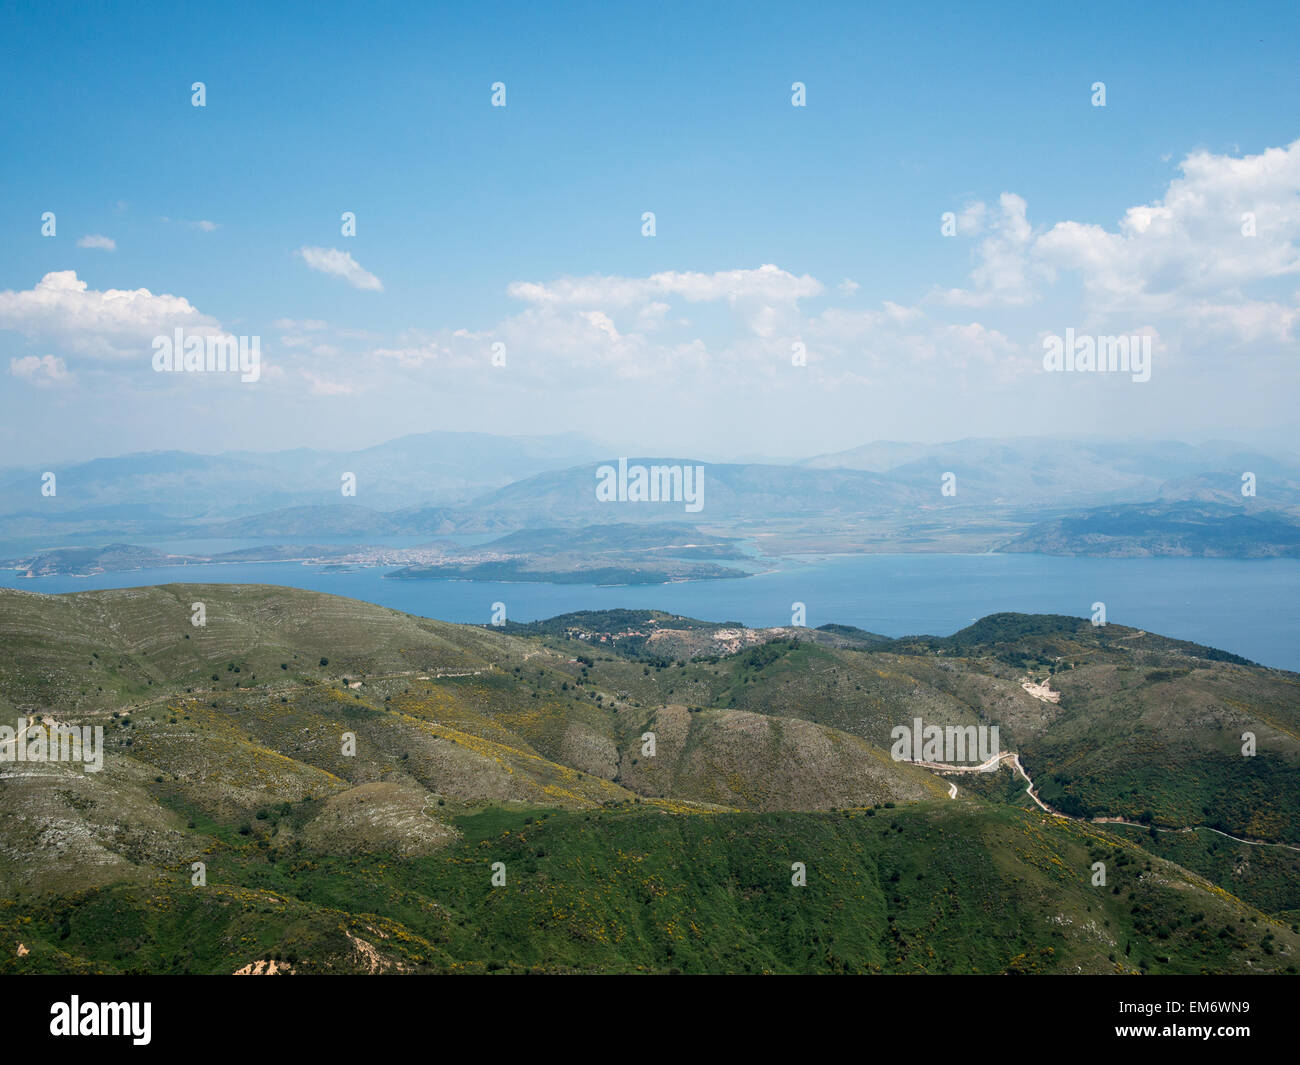 View across the Ionian Sea from Corfu island to Albania Stock Photo